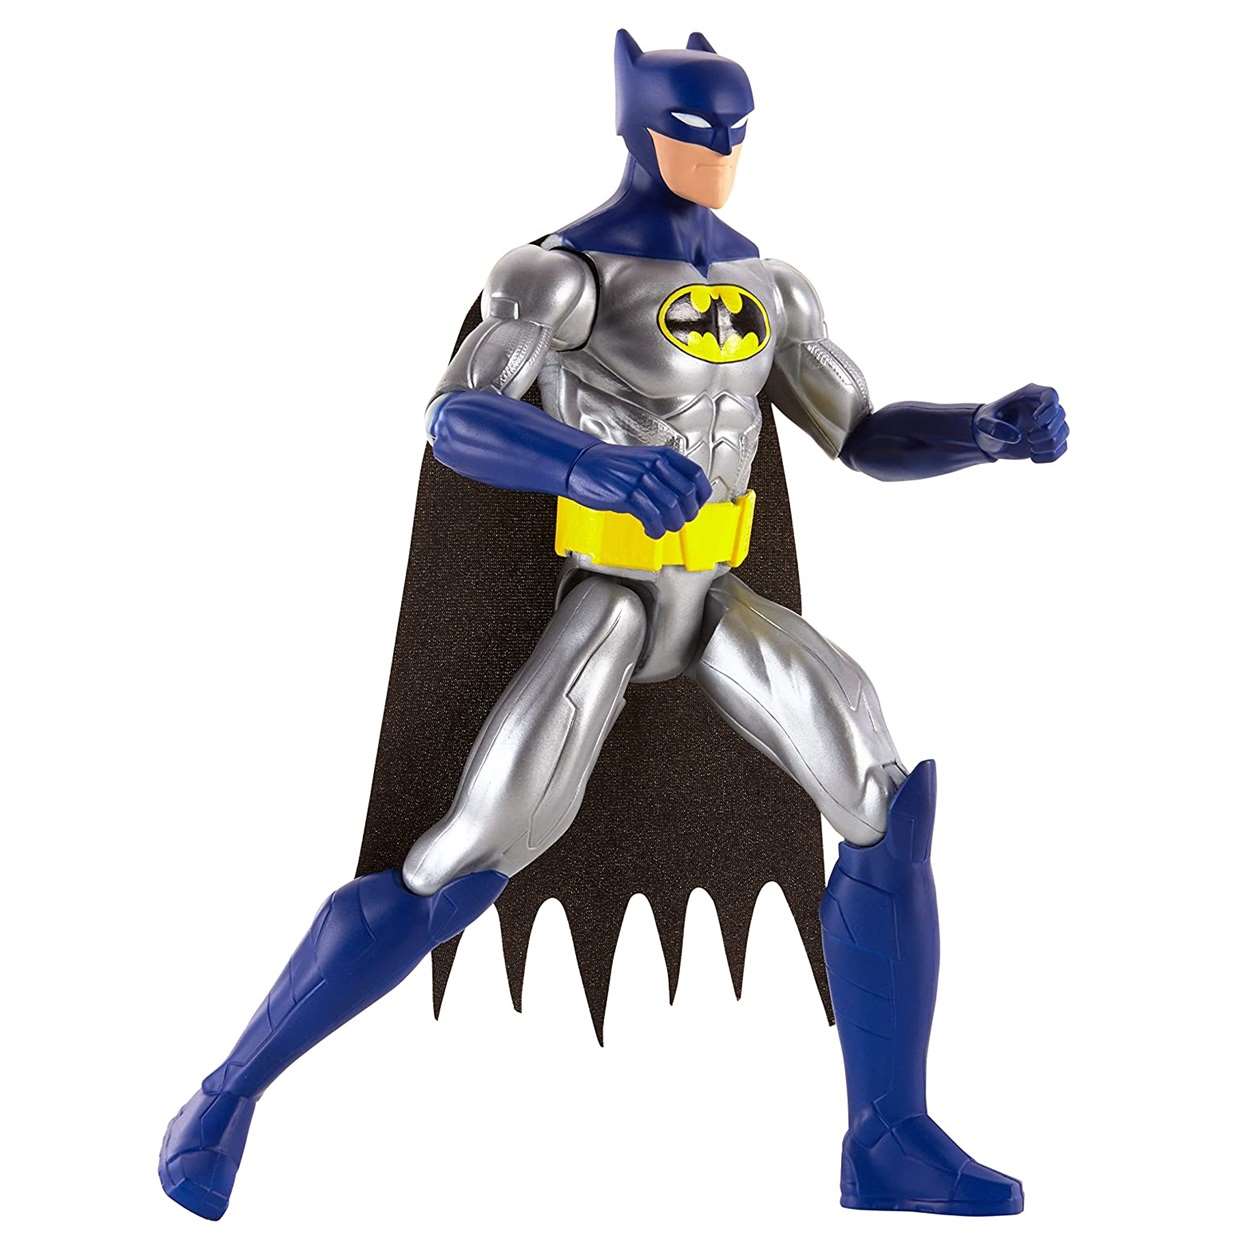 Batman The Caped Crusader Figura Dc Justice League Action 